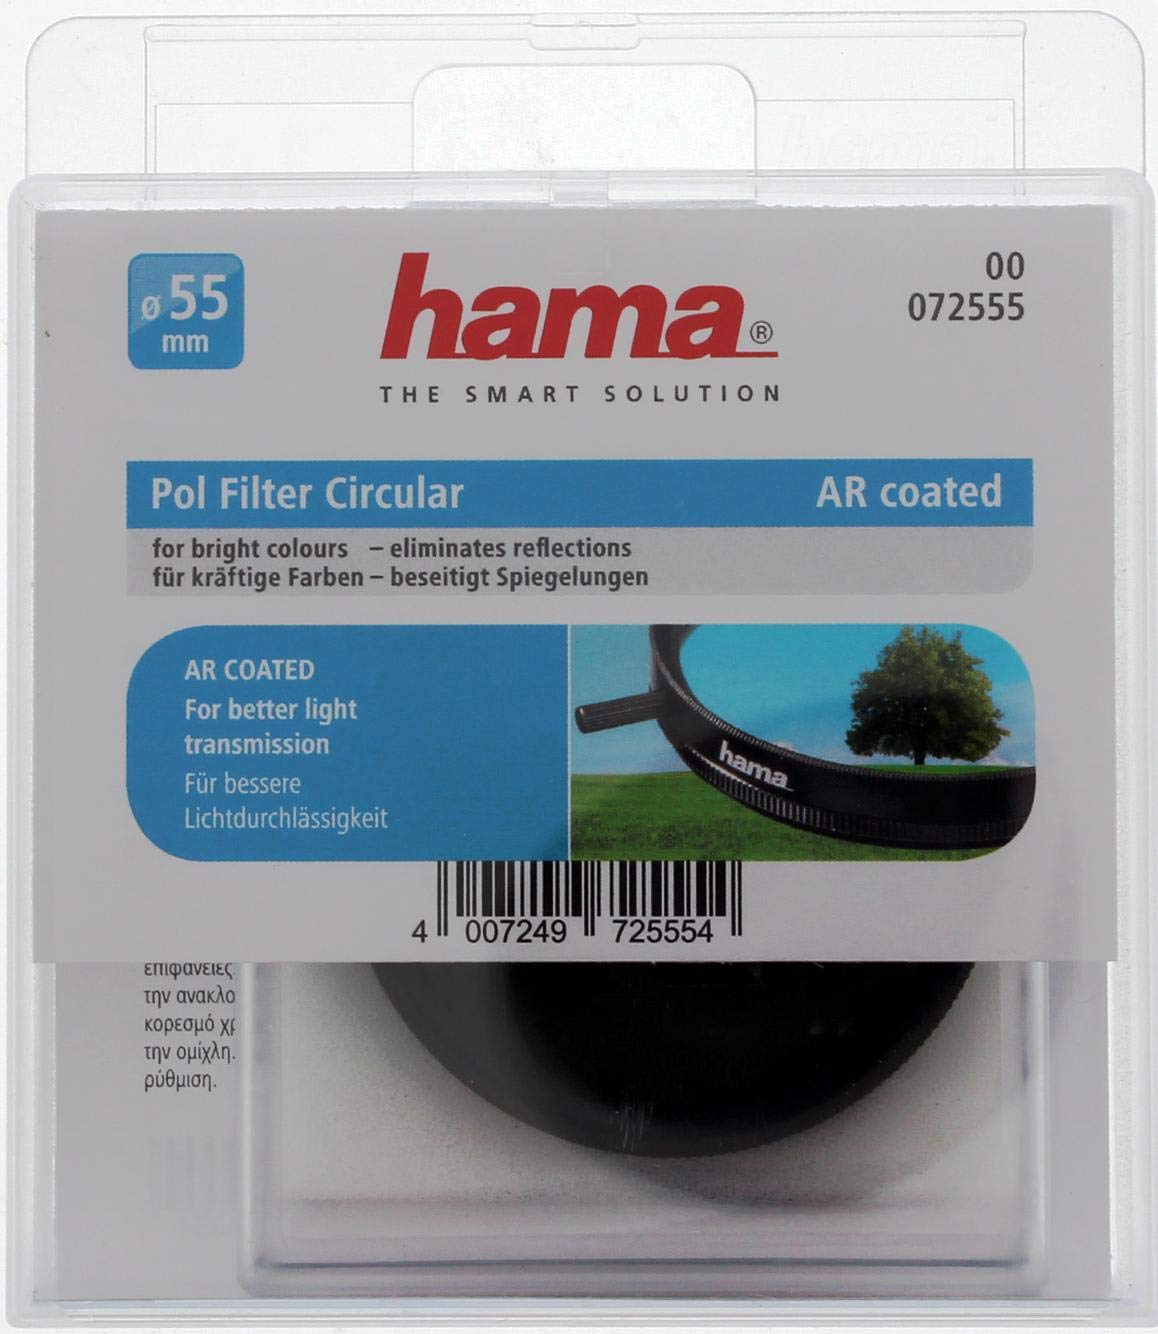 Hama Polarizing Filter Circular AR Coated 55.0 mm